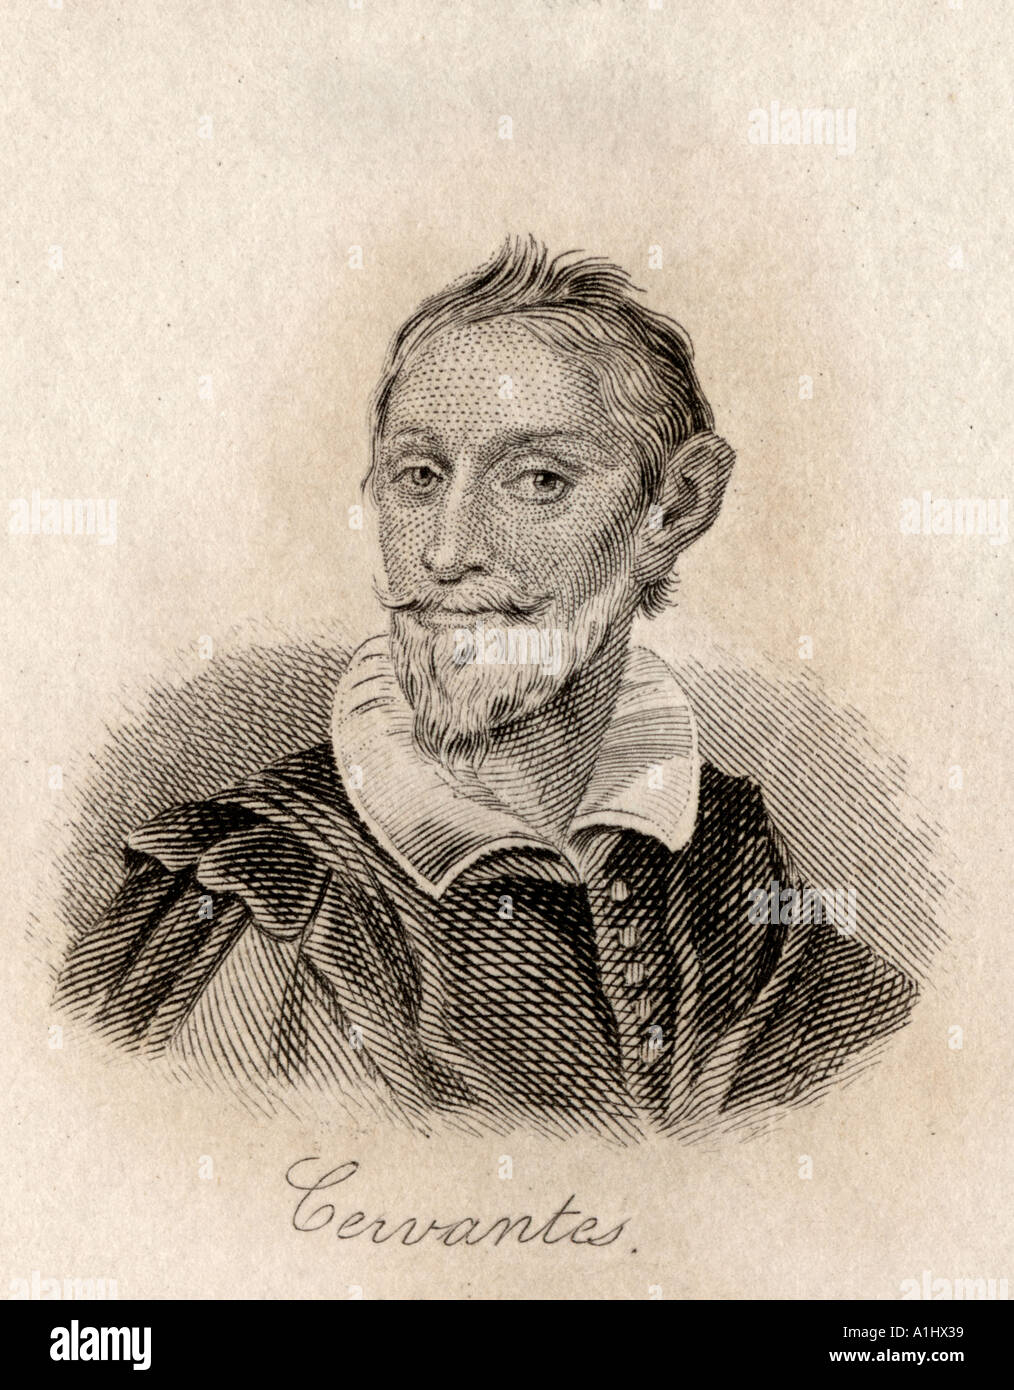 Miguel Saavedra de Cervantes, 1547 - 1616. Spanish writer. Stock Photo